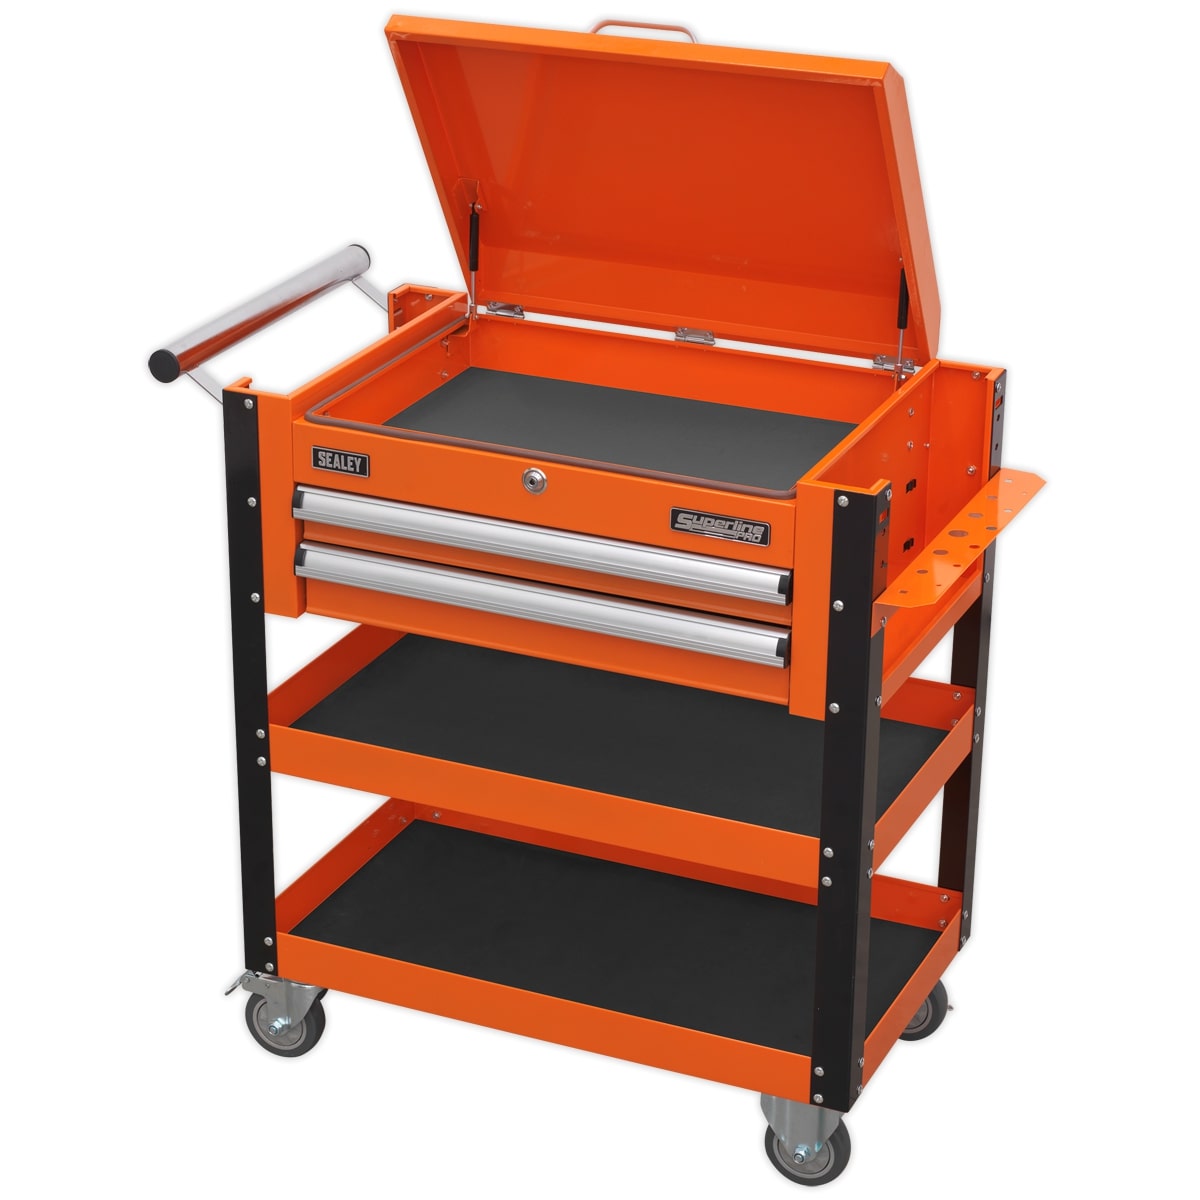 Sealey AP760MO Heavy-Duty Mobile Tool & Parts Trolley 2 Drawers & Lockable Top - Orange